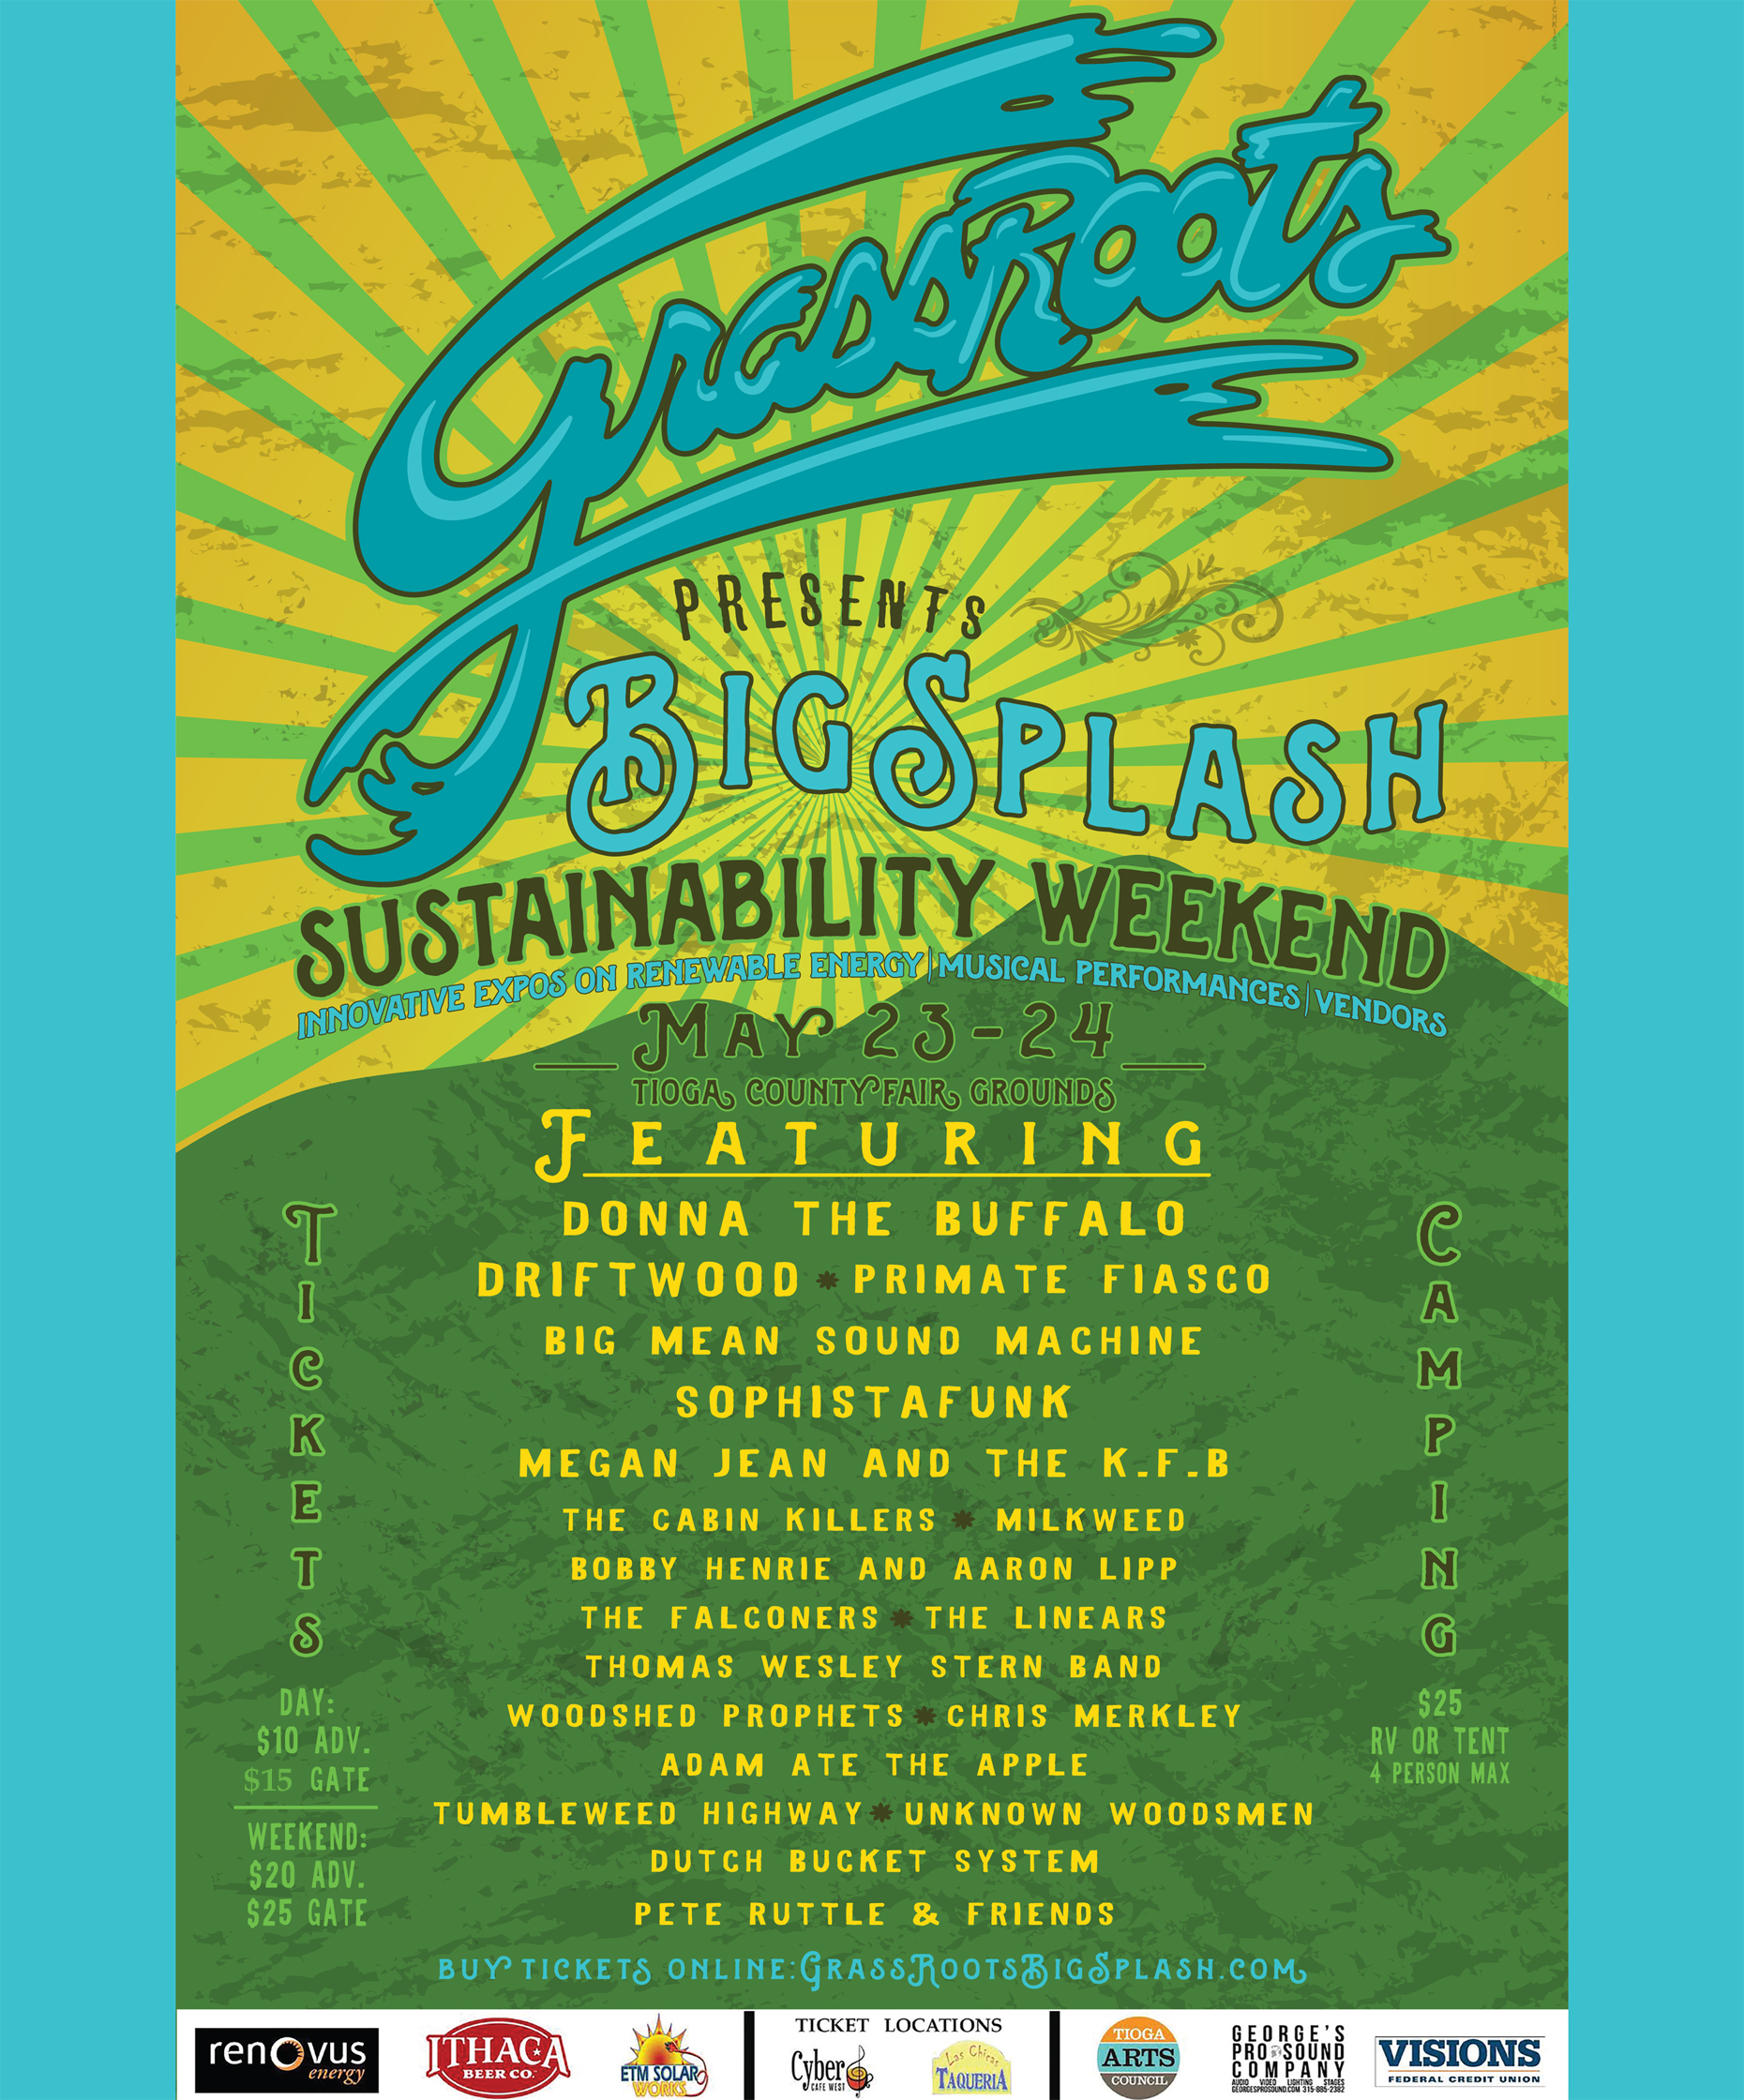 Big Splash Sustainability Weekend returns to Owego